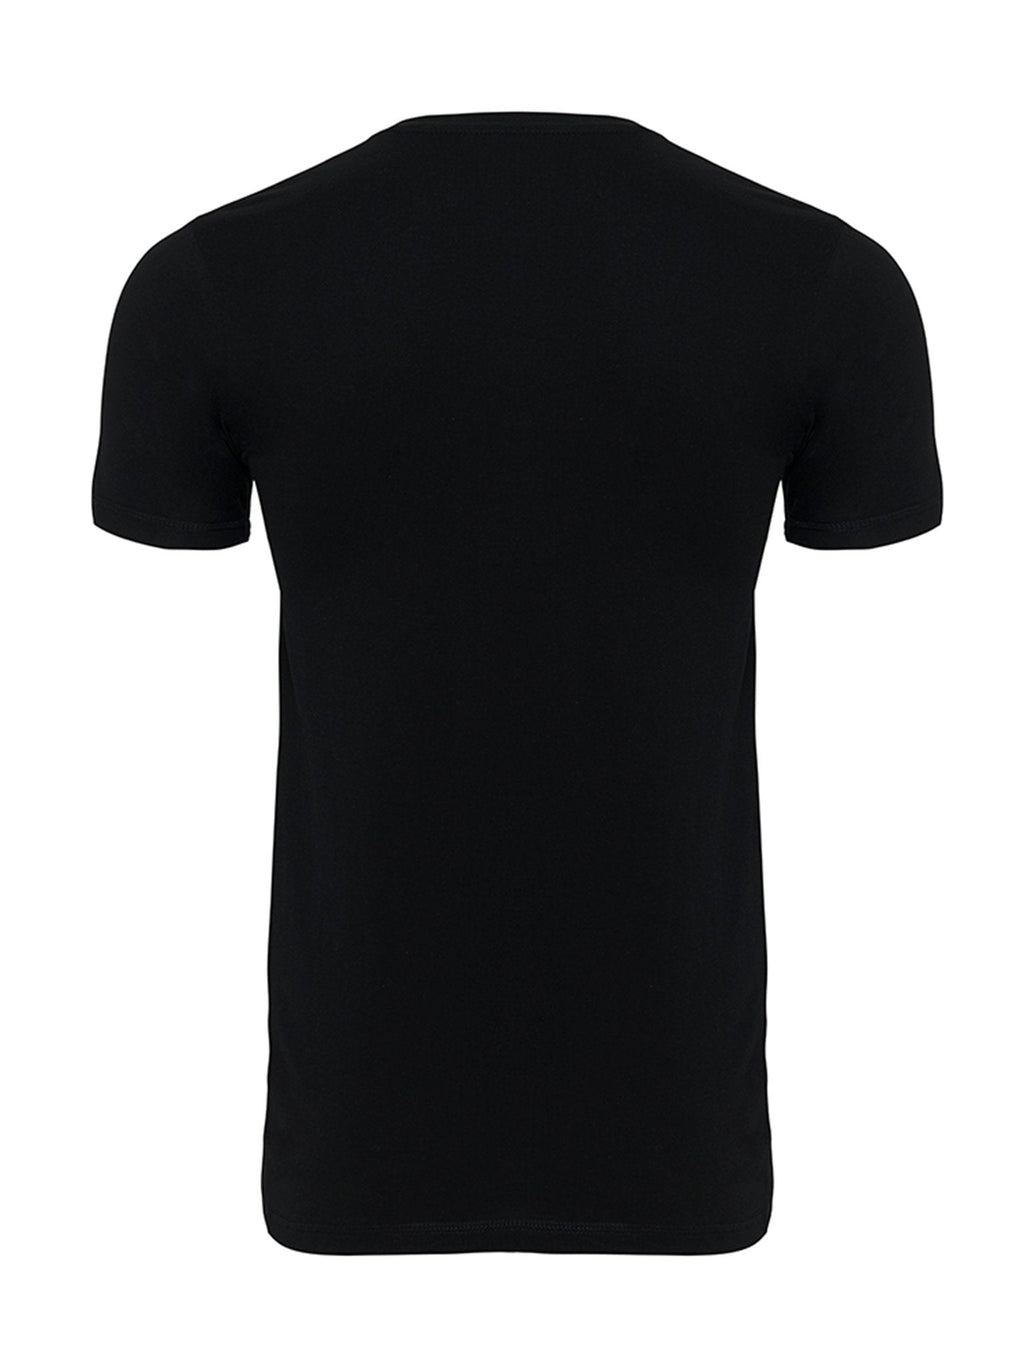 Muscle T-shirt - Black (FS)